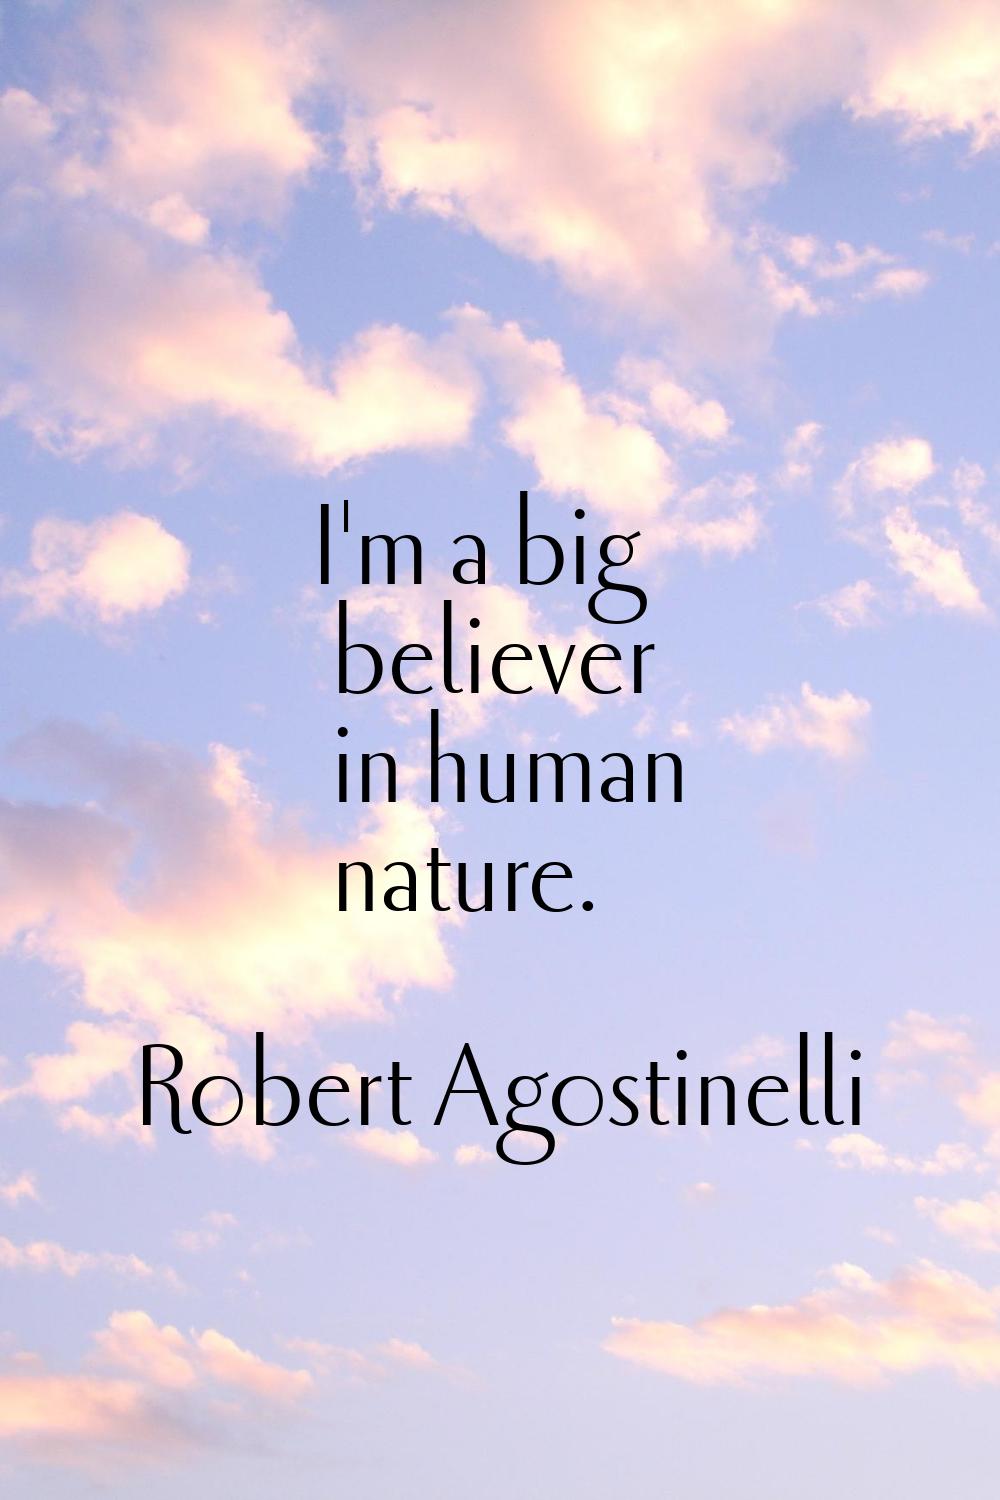 I'm a big believer in human nature.